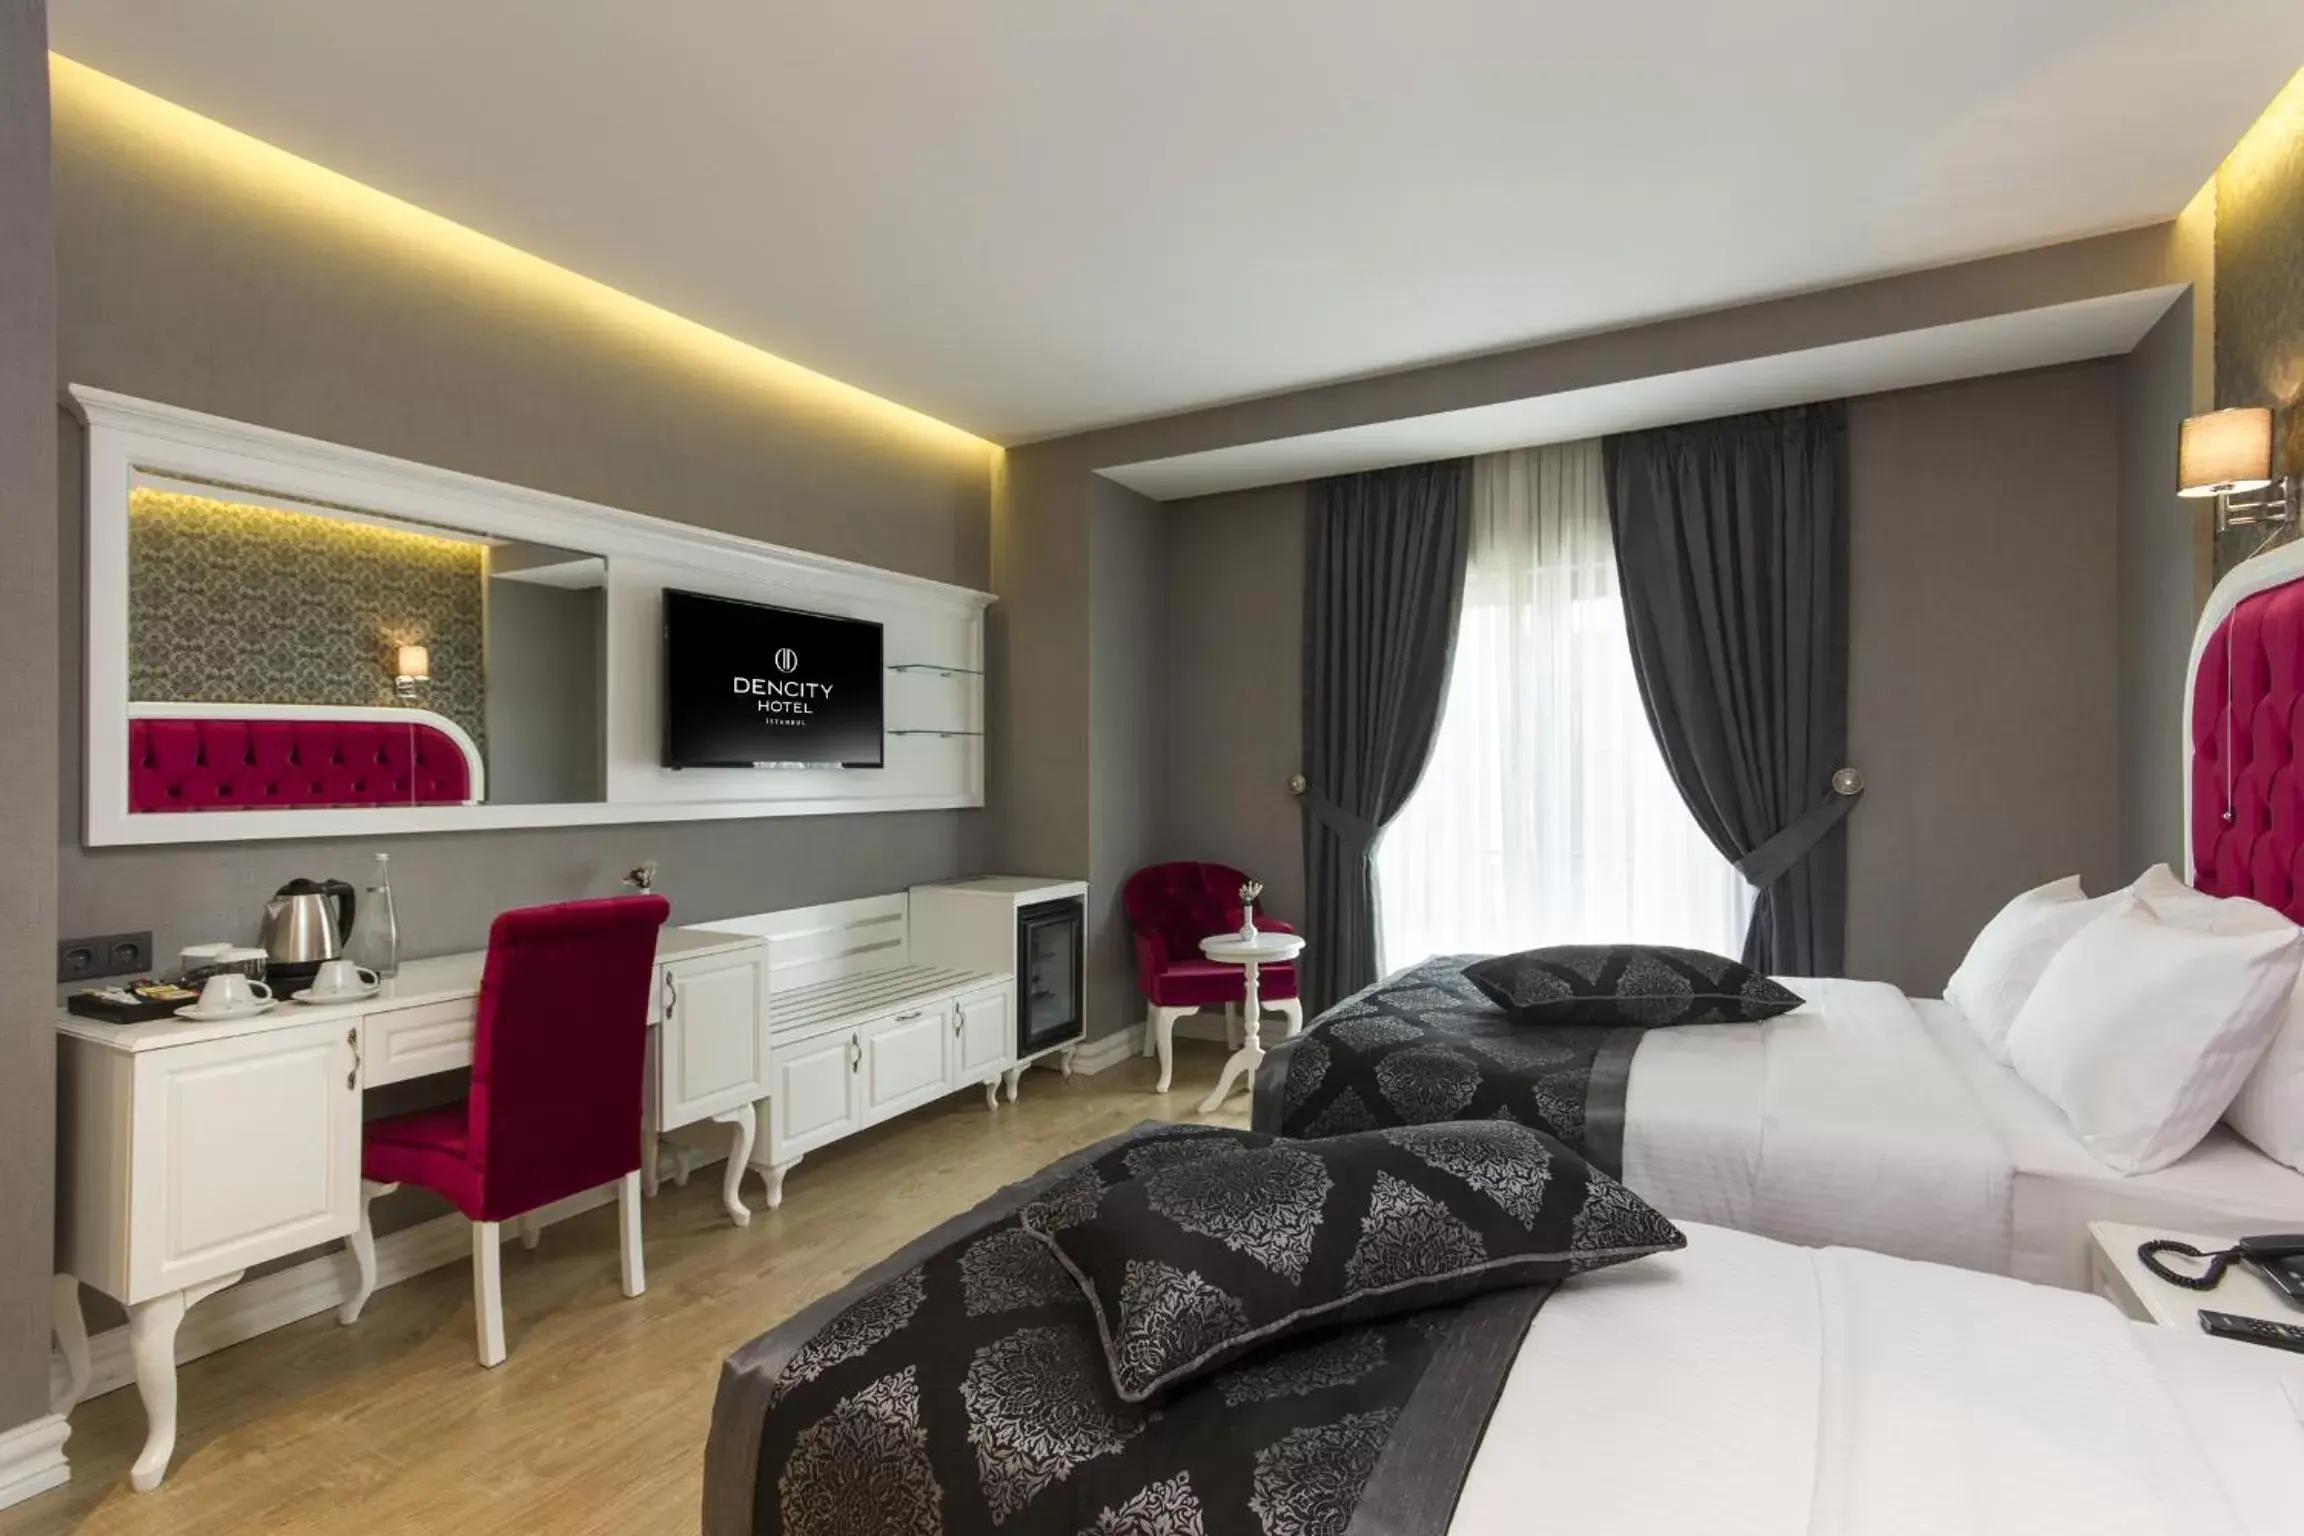 Bedroom in Dencity Hotels & Spa